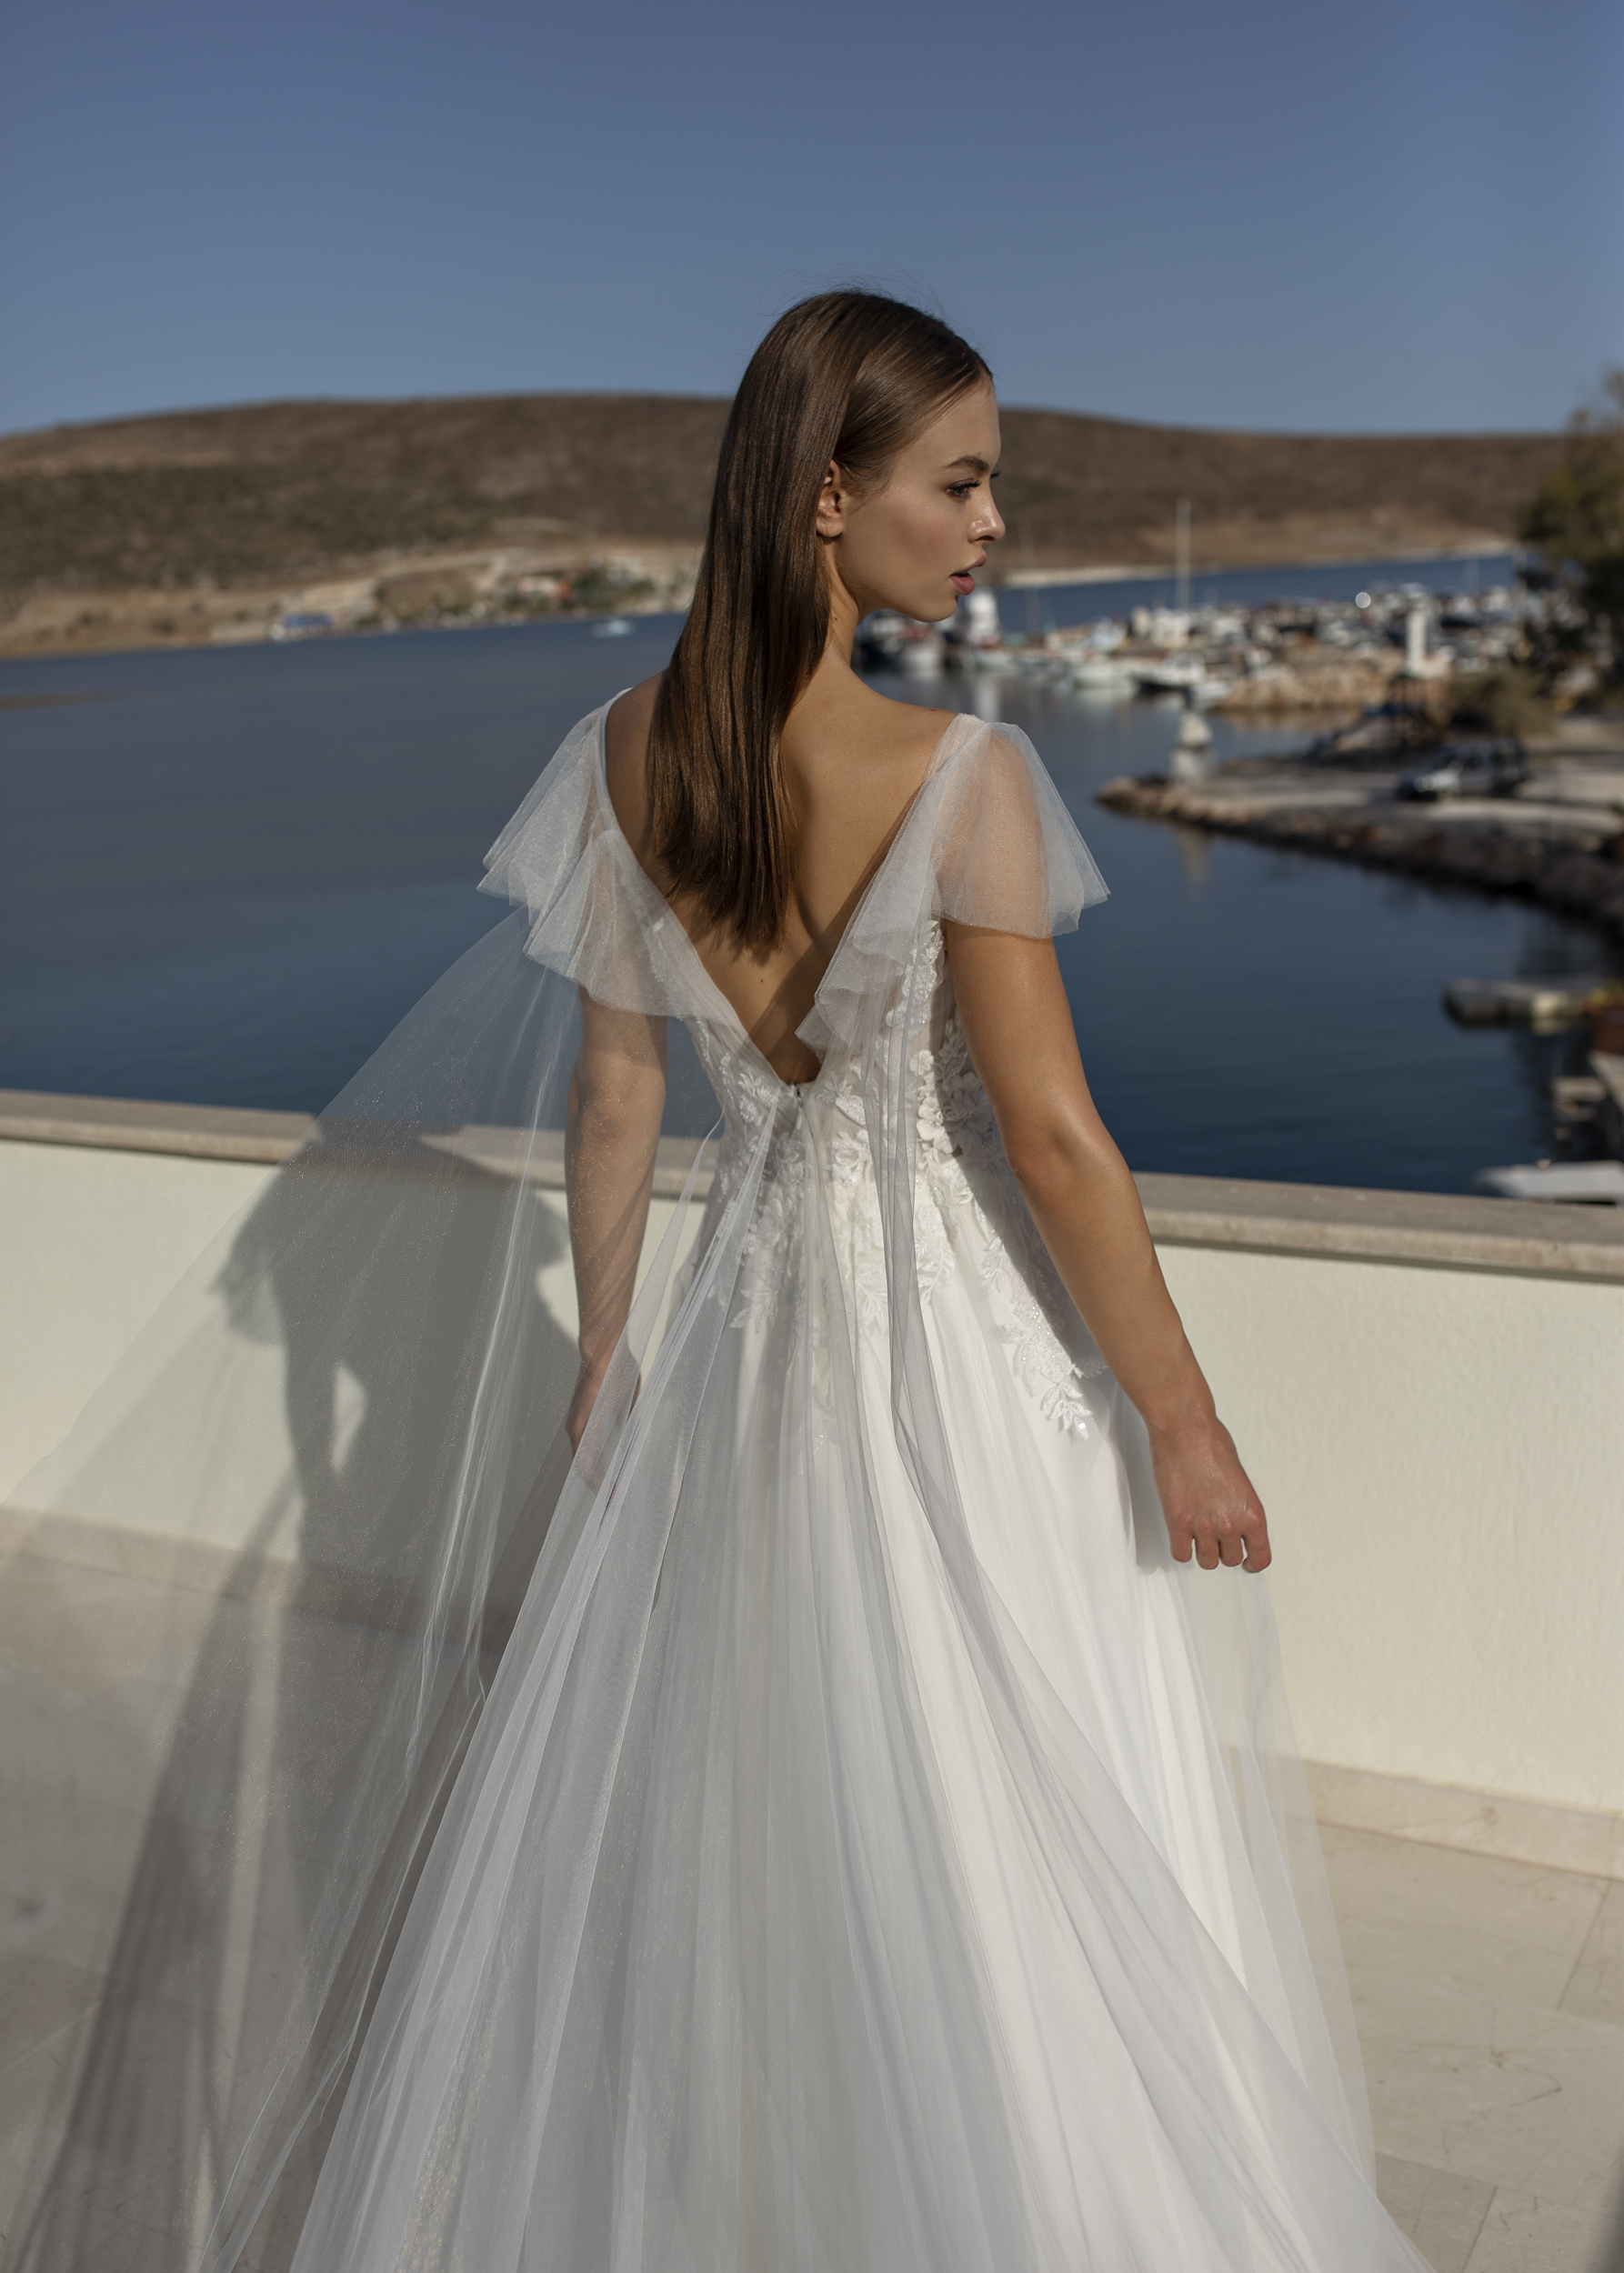 Olda wedding dress by Modeca